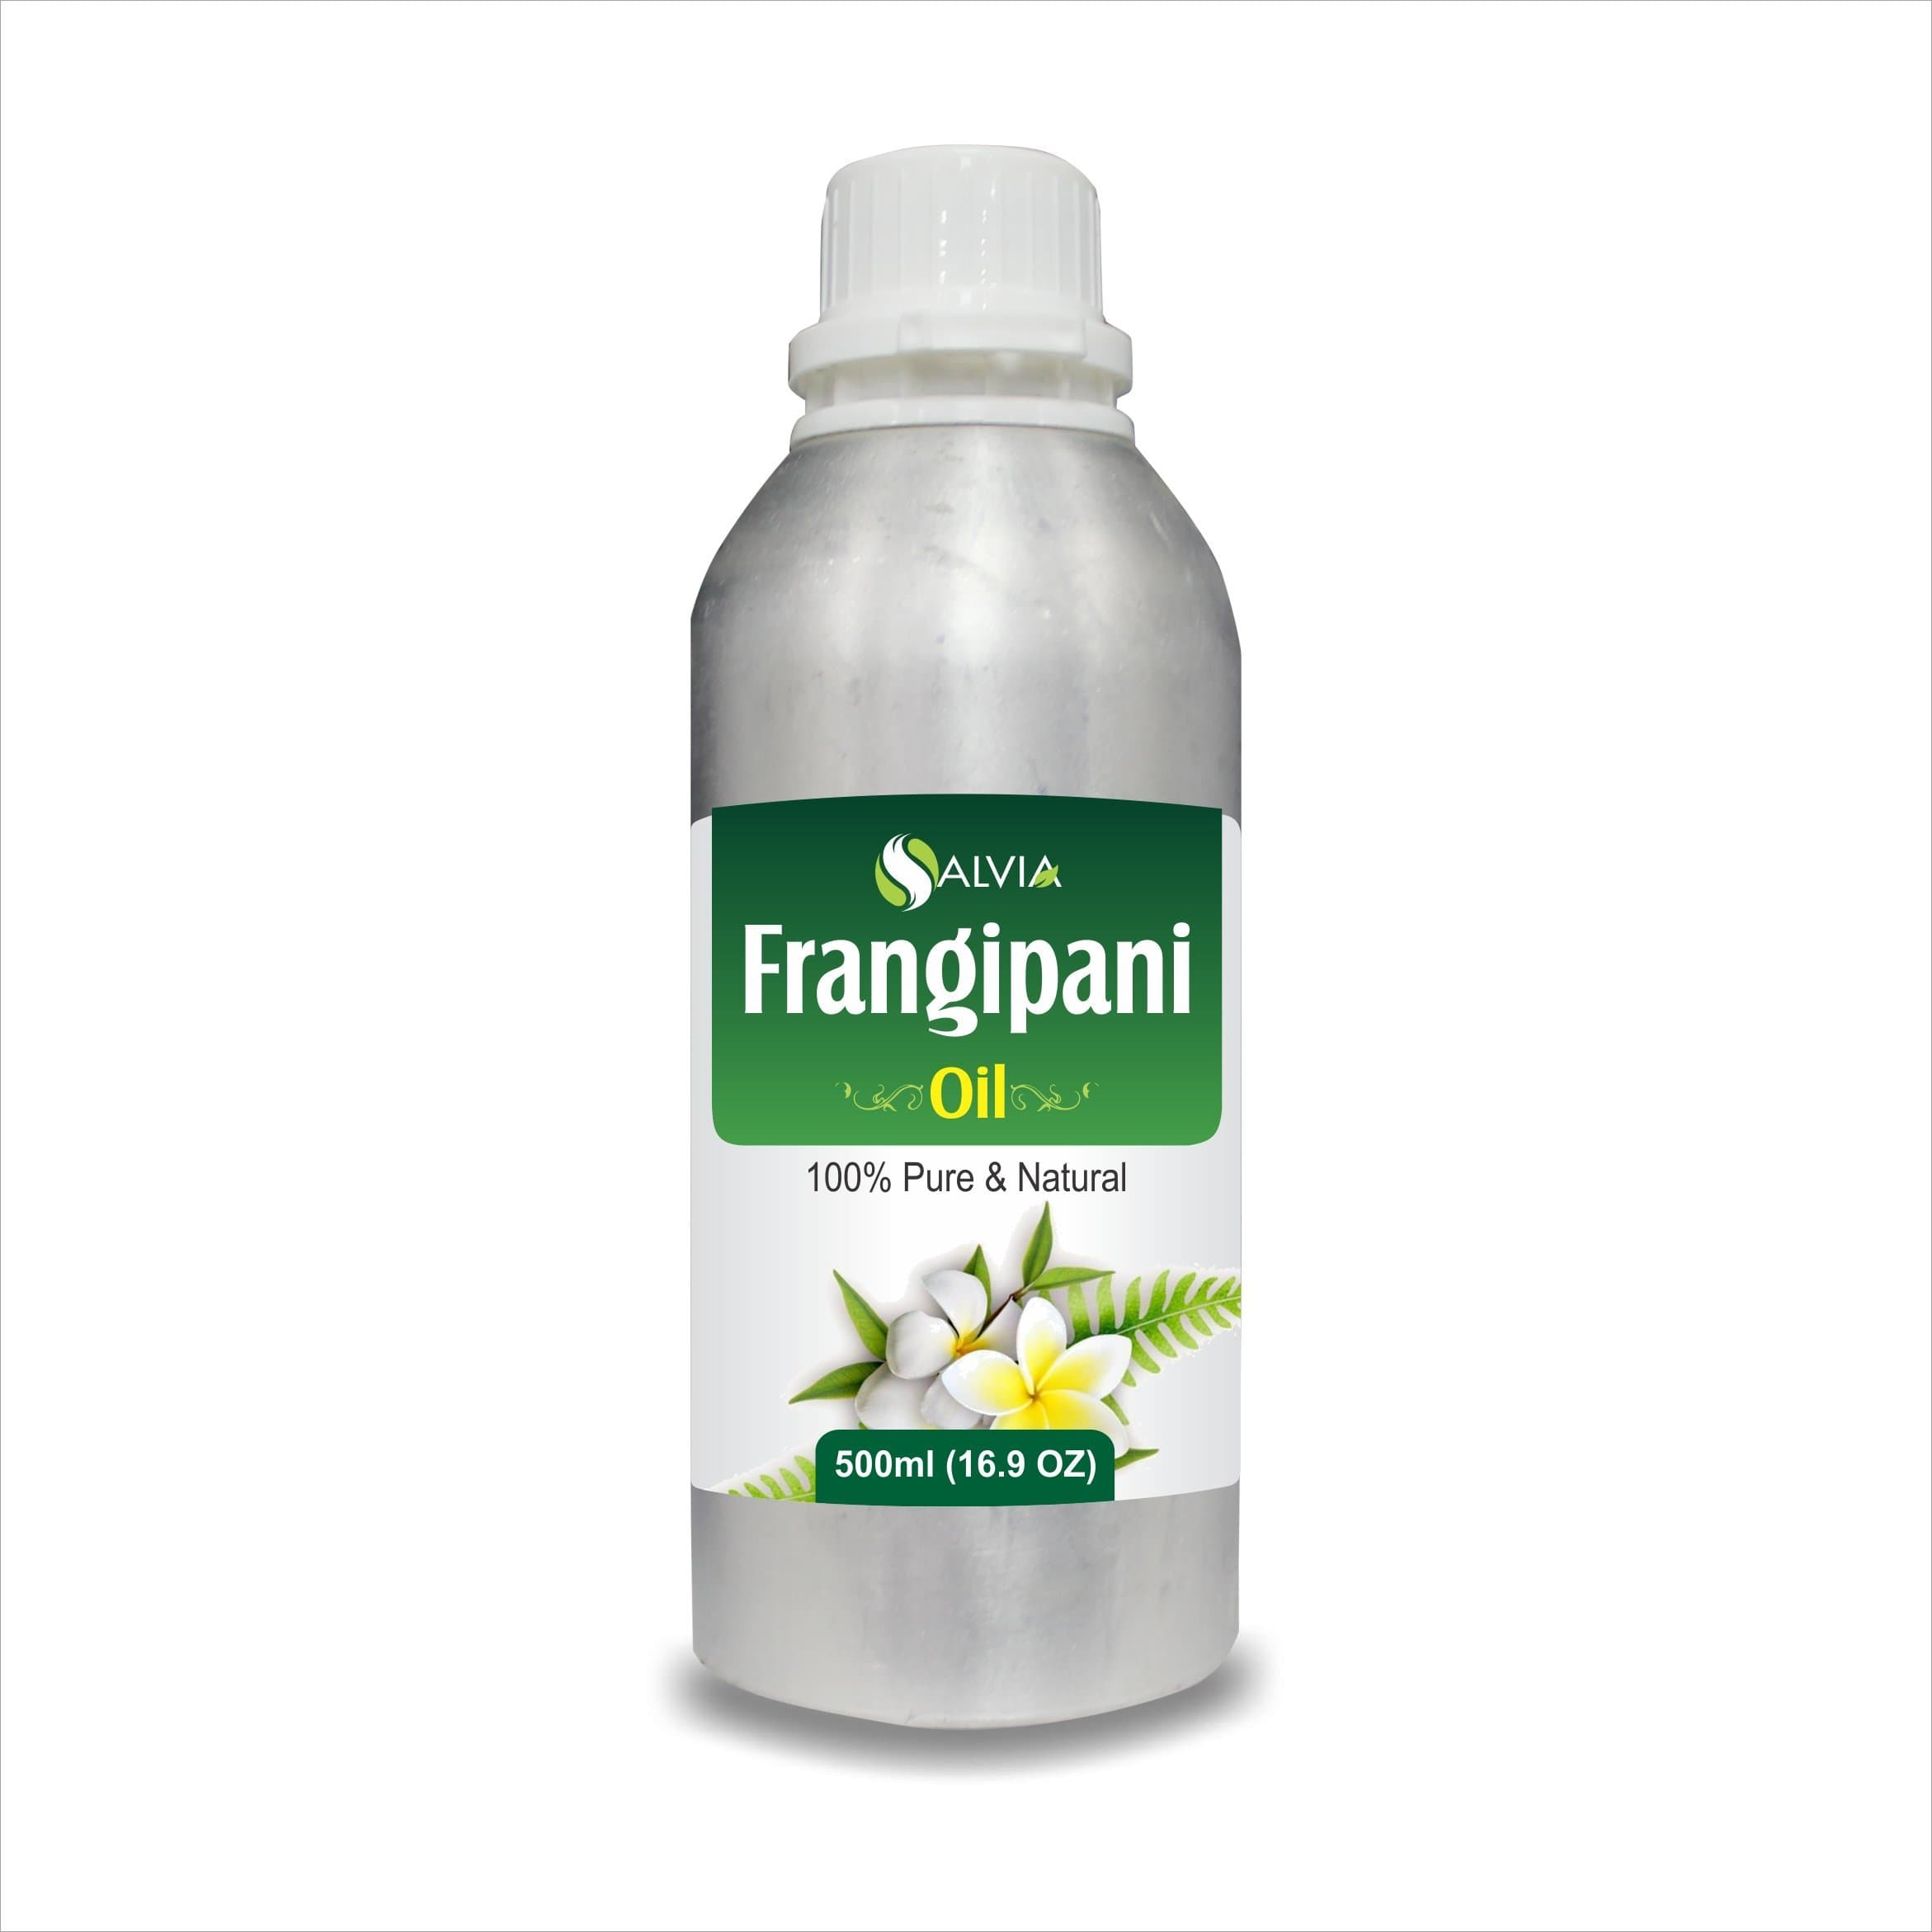 frangipani oil uses